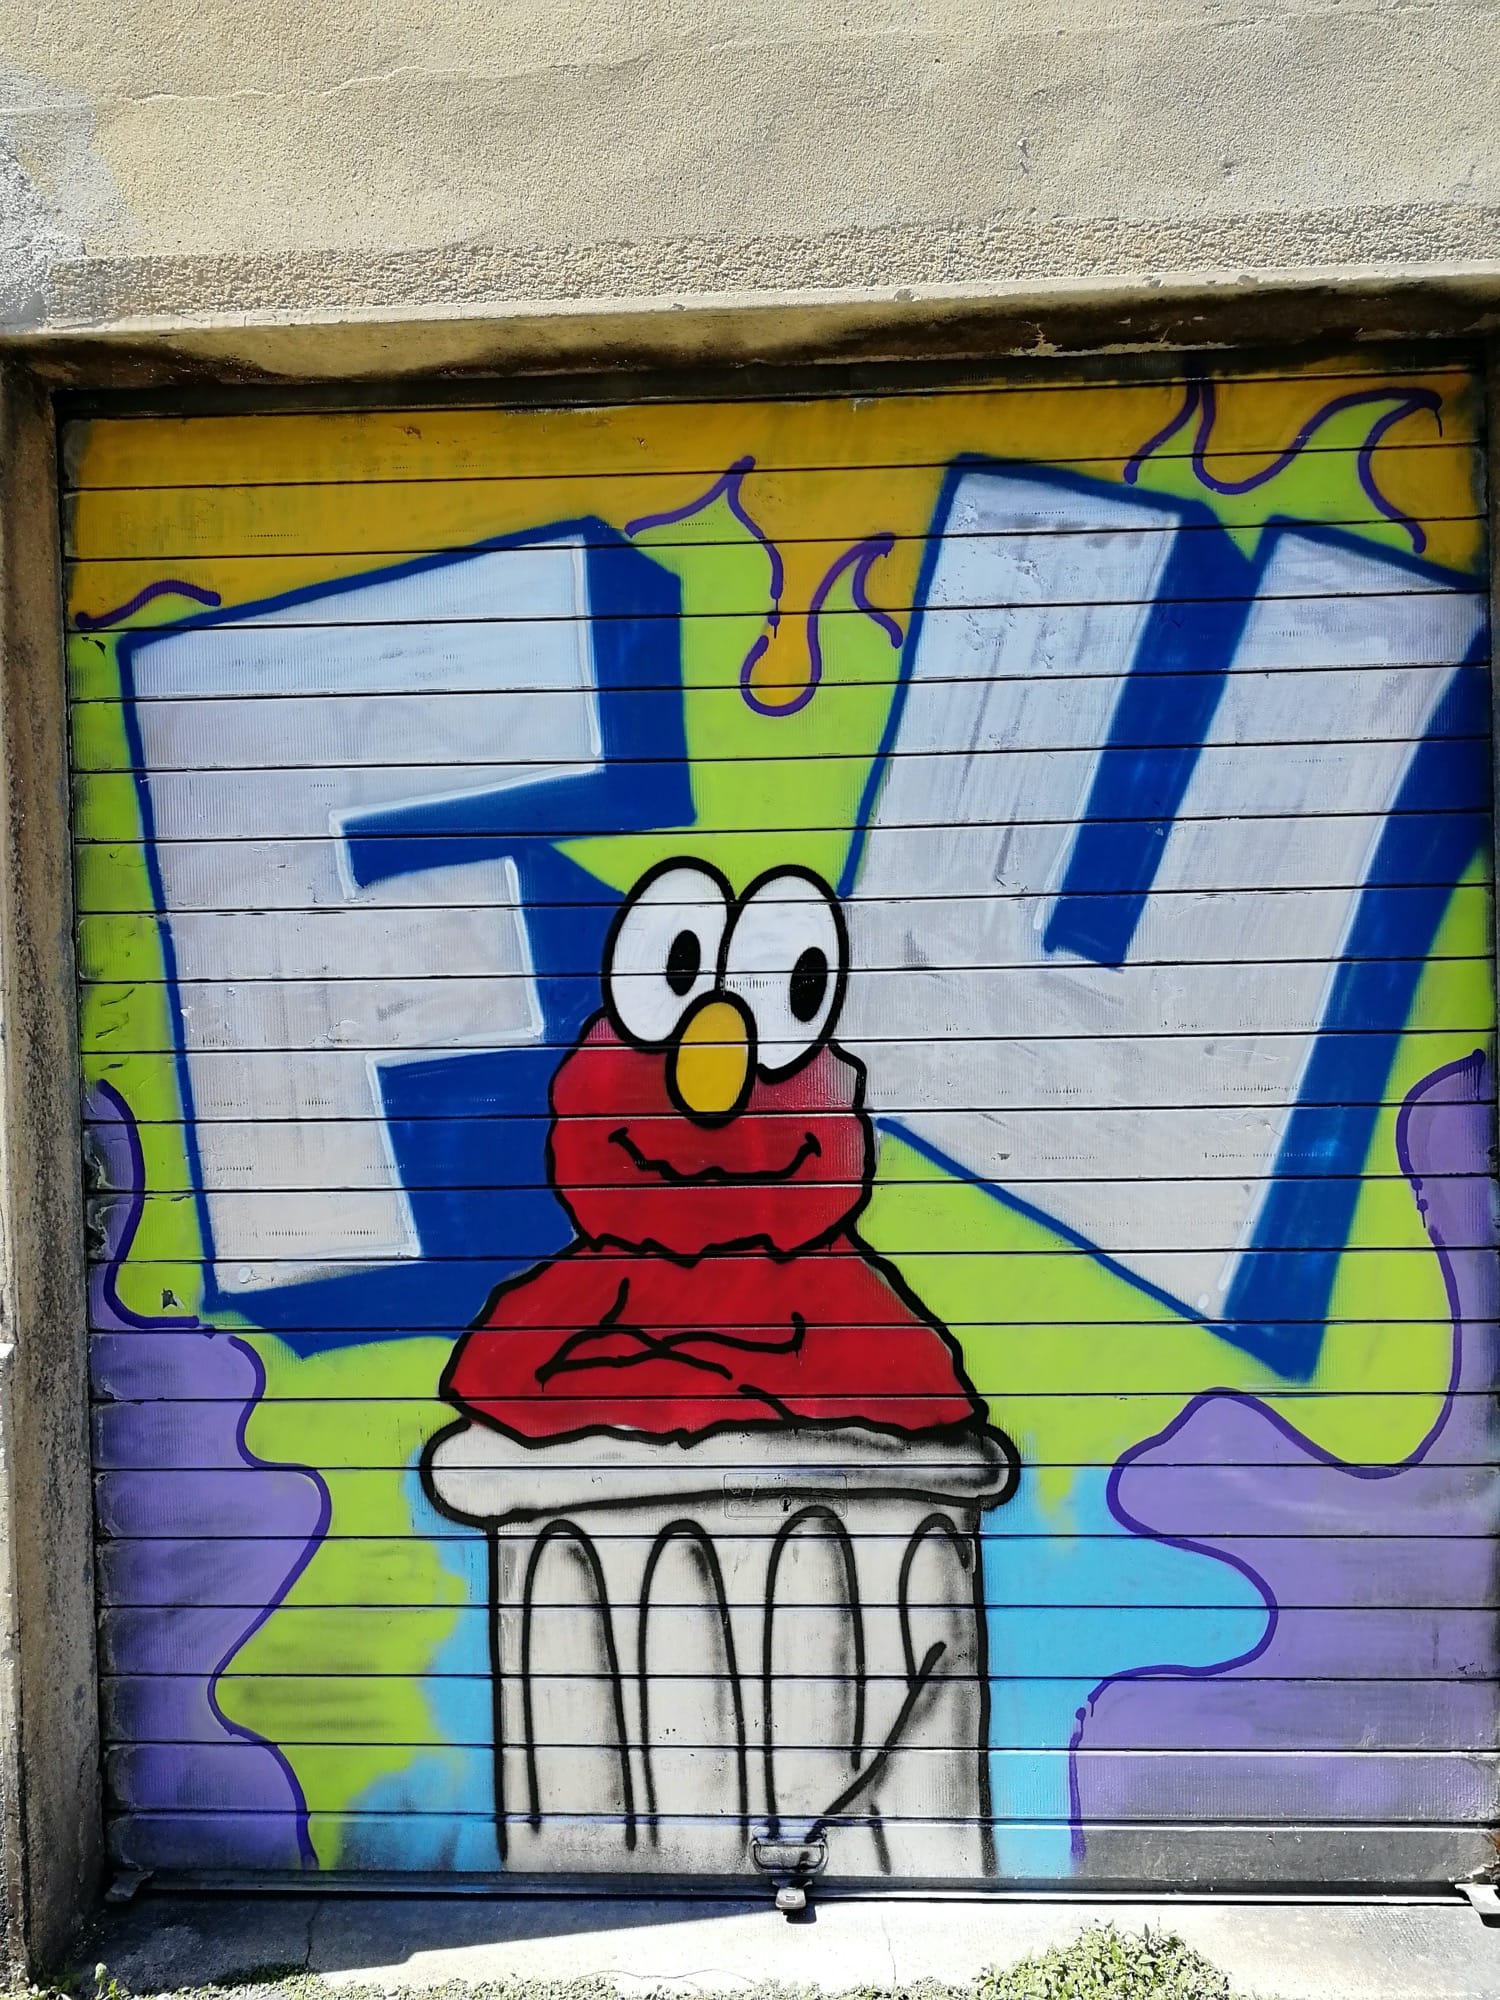 Graffiti 1604  captured by Rabot in Lyon France